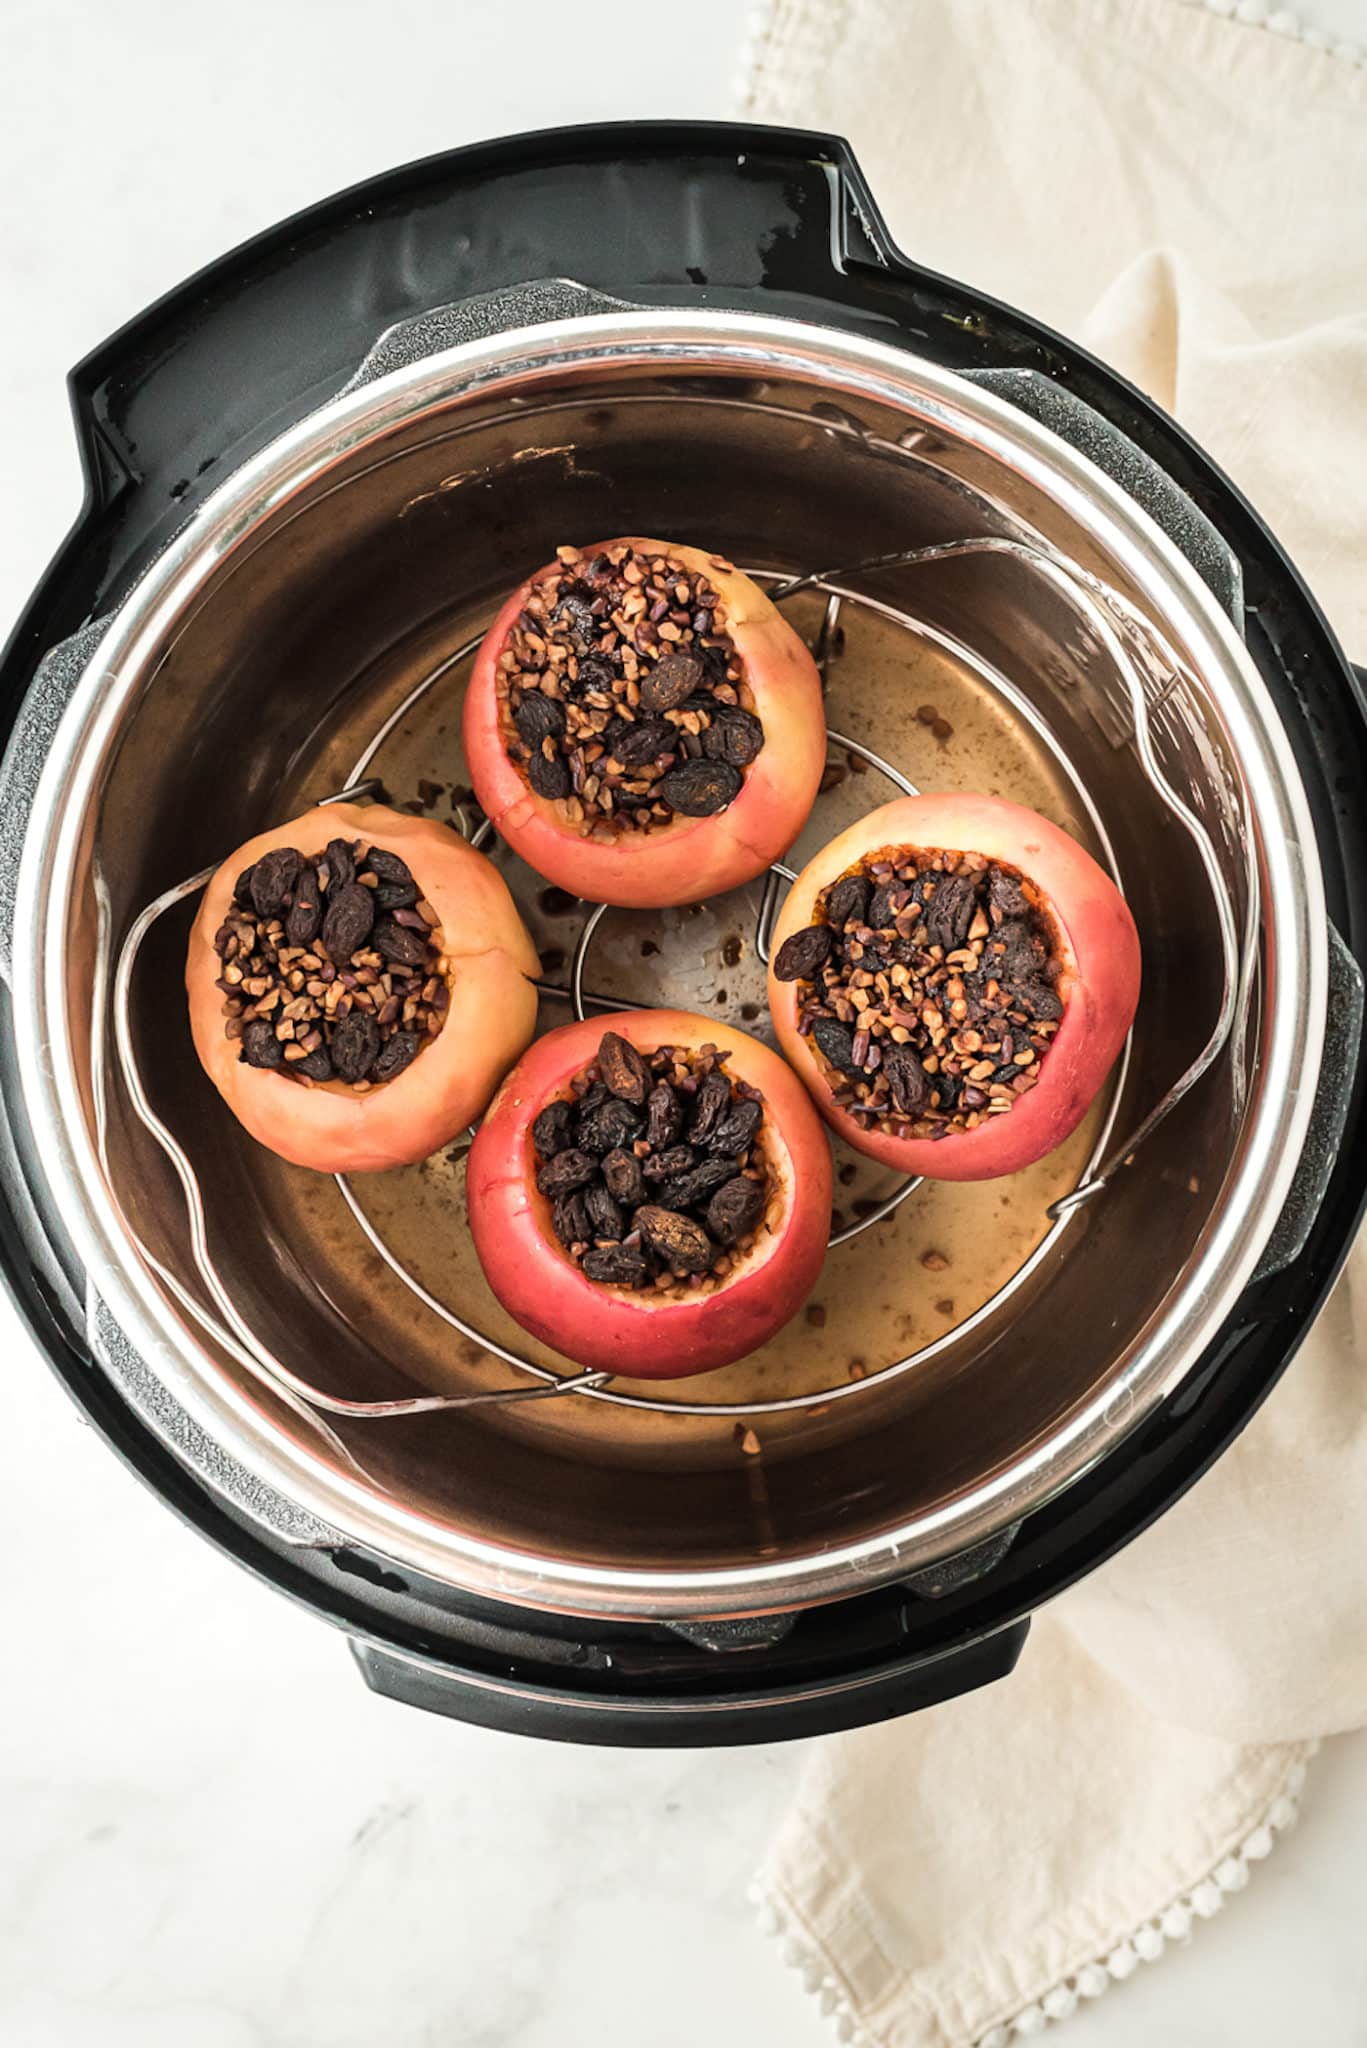 baked apples inside of the instant pot pressure cooker